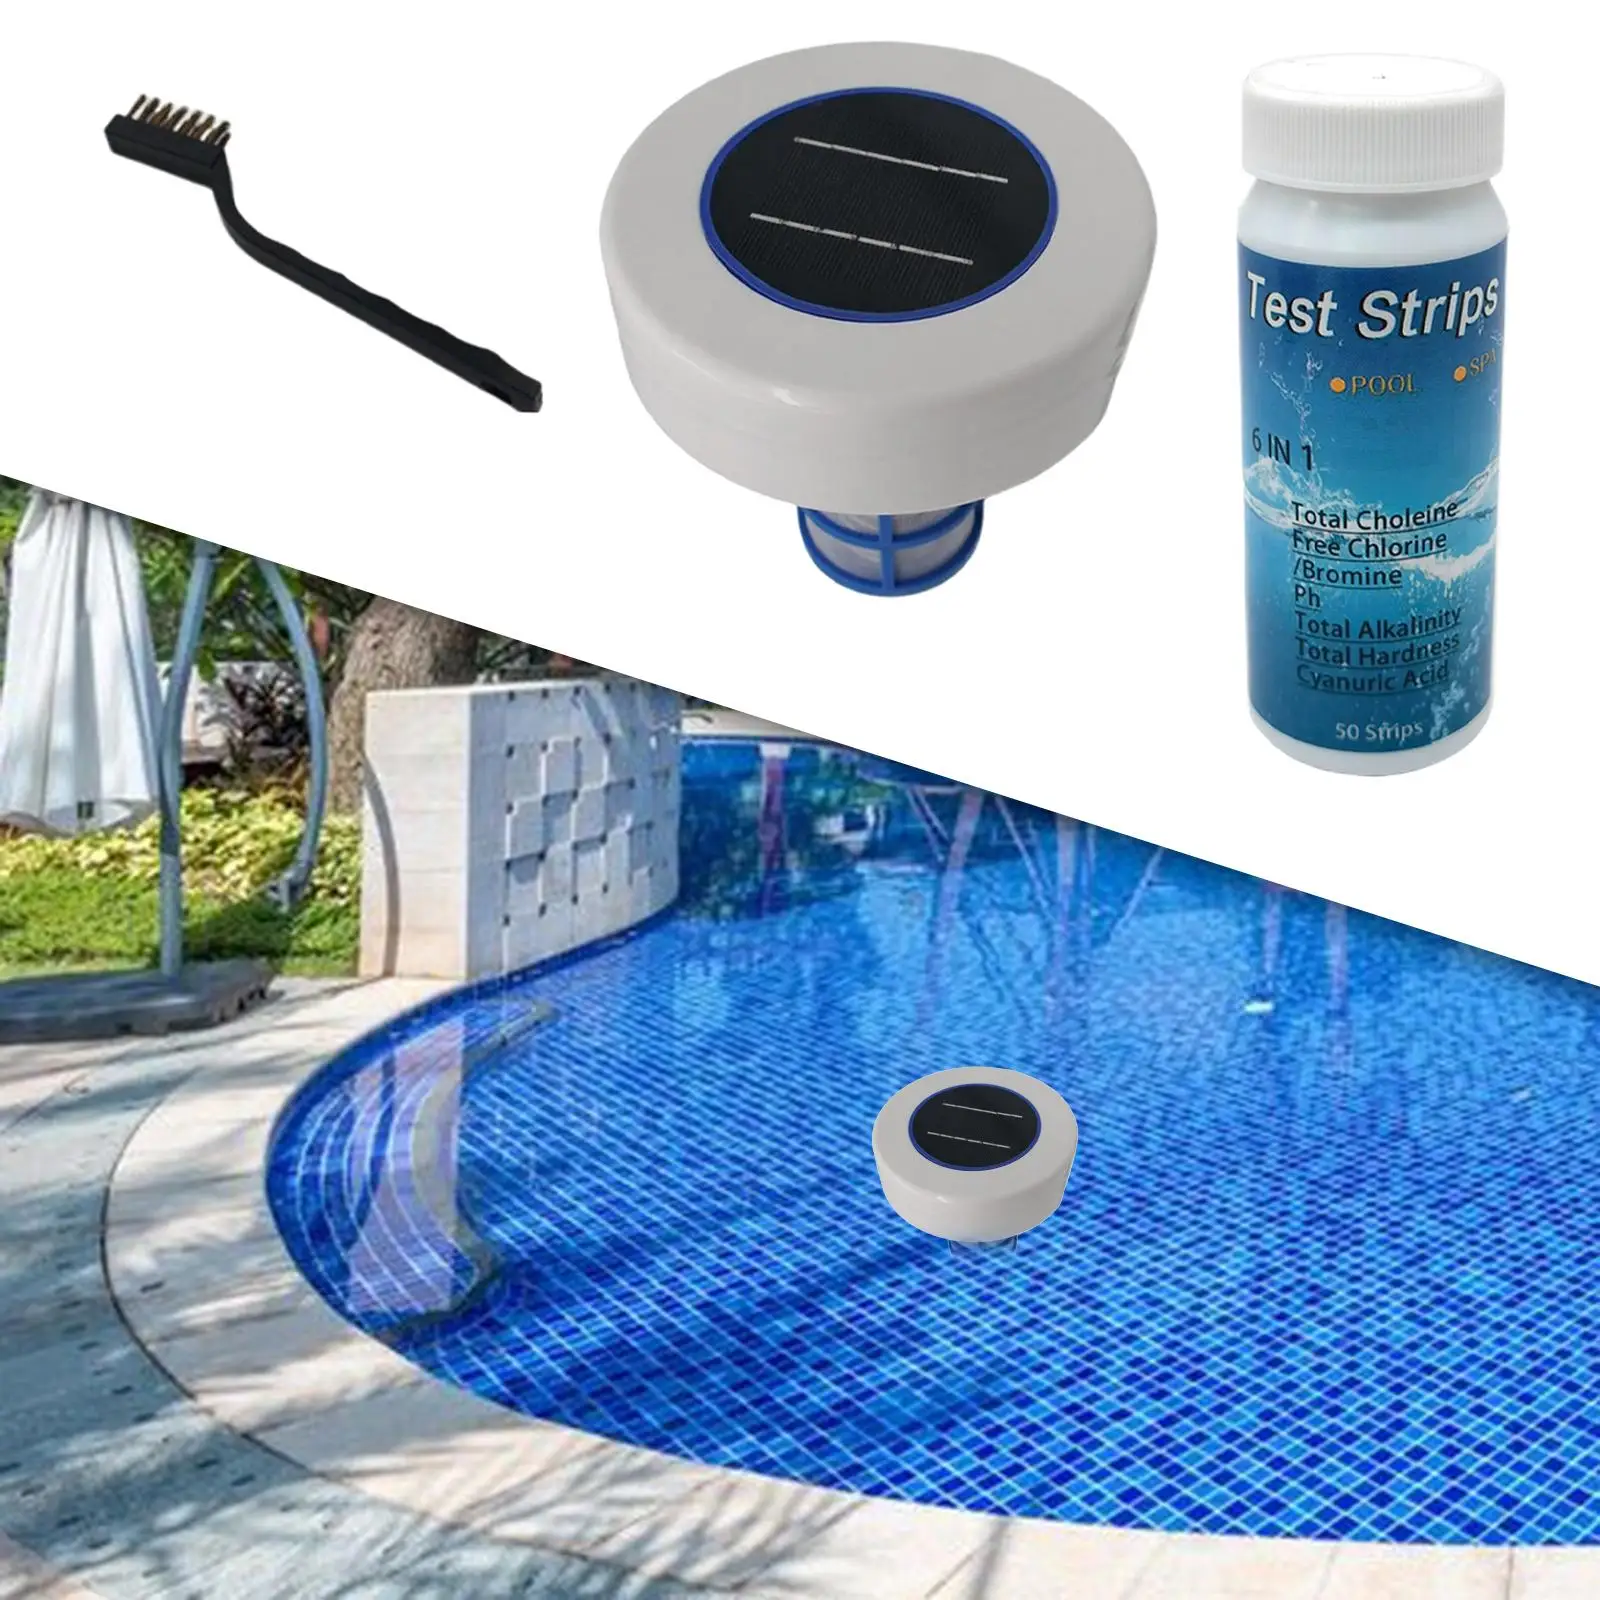 

Pool Solar Pool Ionizer Reduce Chlorine Keeps Pool Cleaner Kills Algae Solar Powered Pool Clarifier Water Purifier for Hot Tub